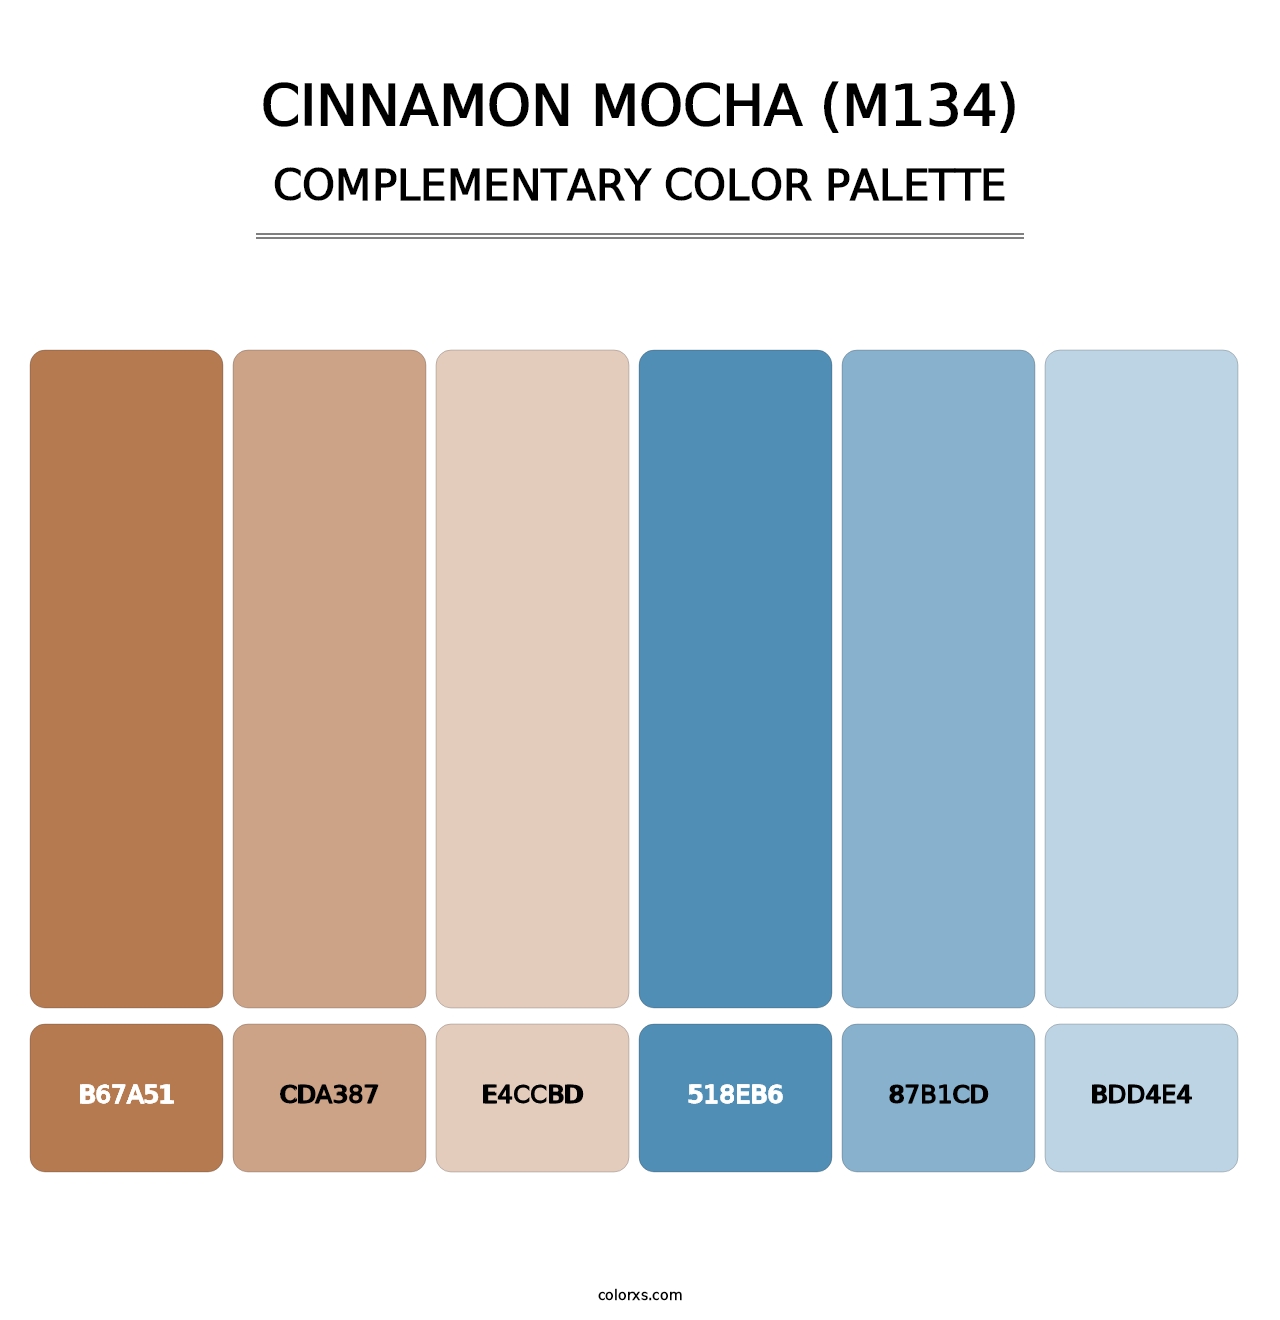 Cinnamon Mocha (M134) - Complementary Color Palette